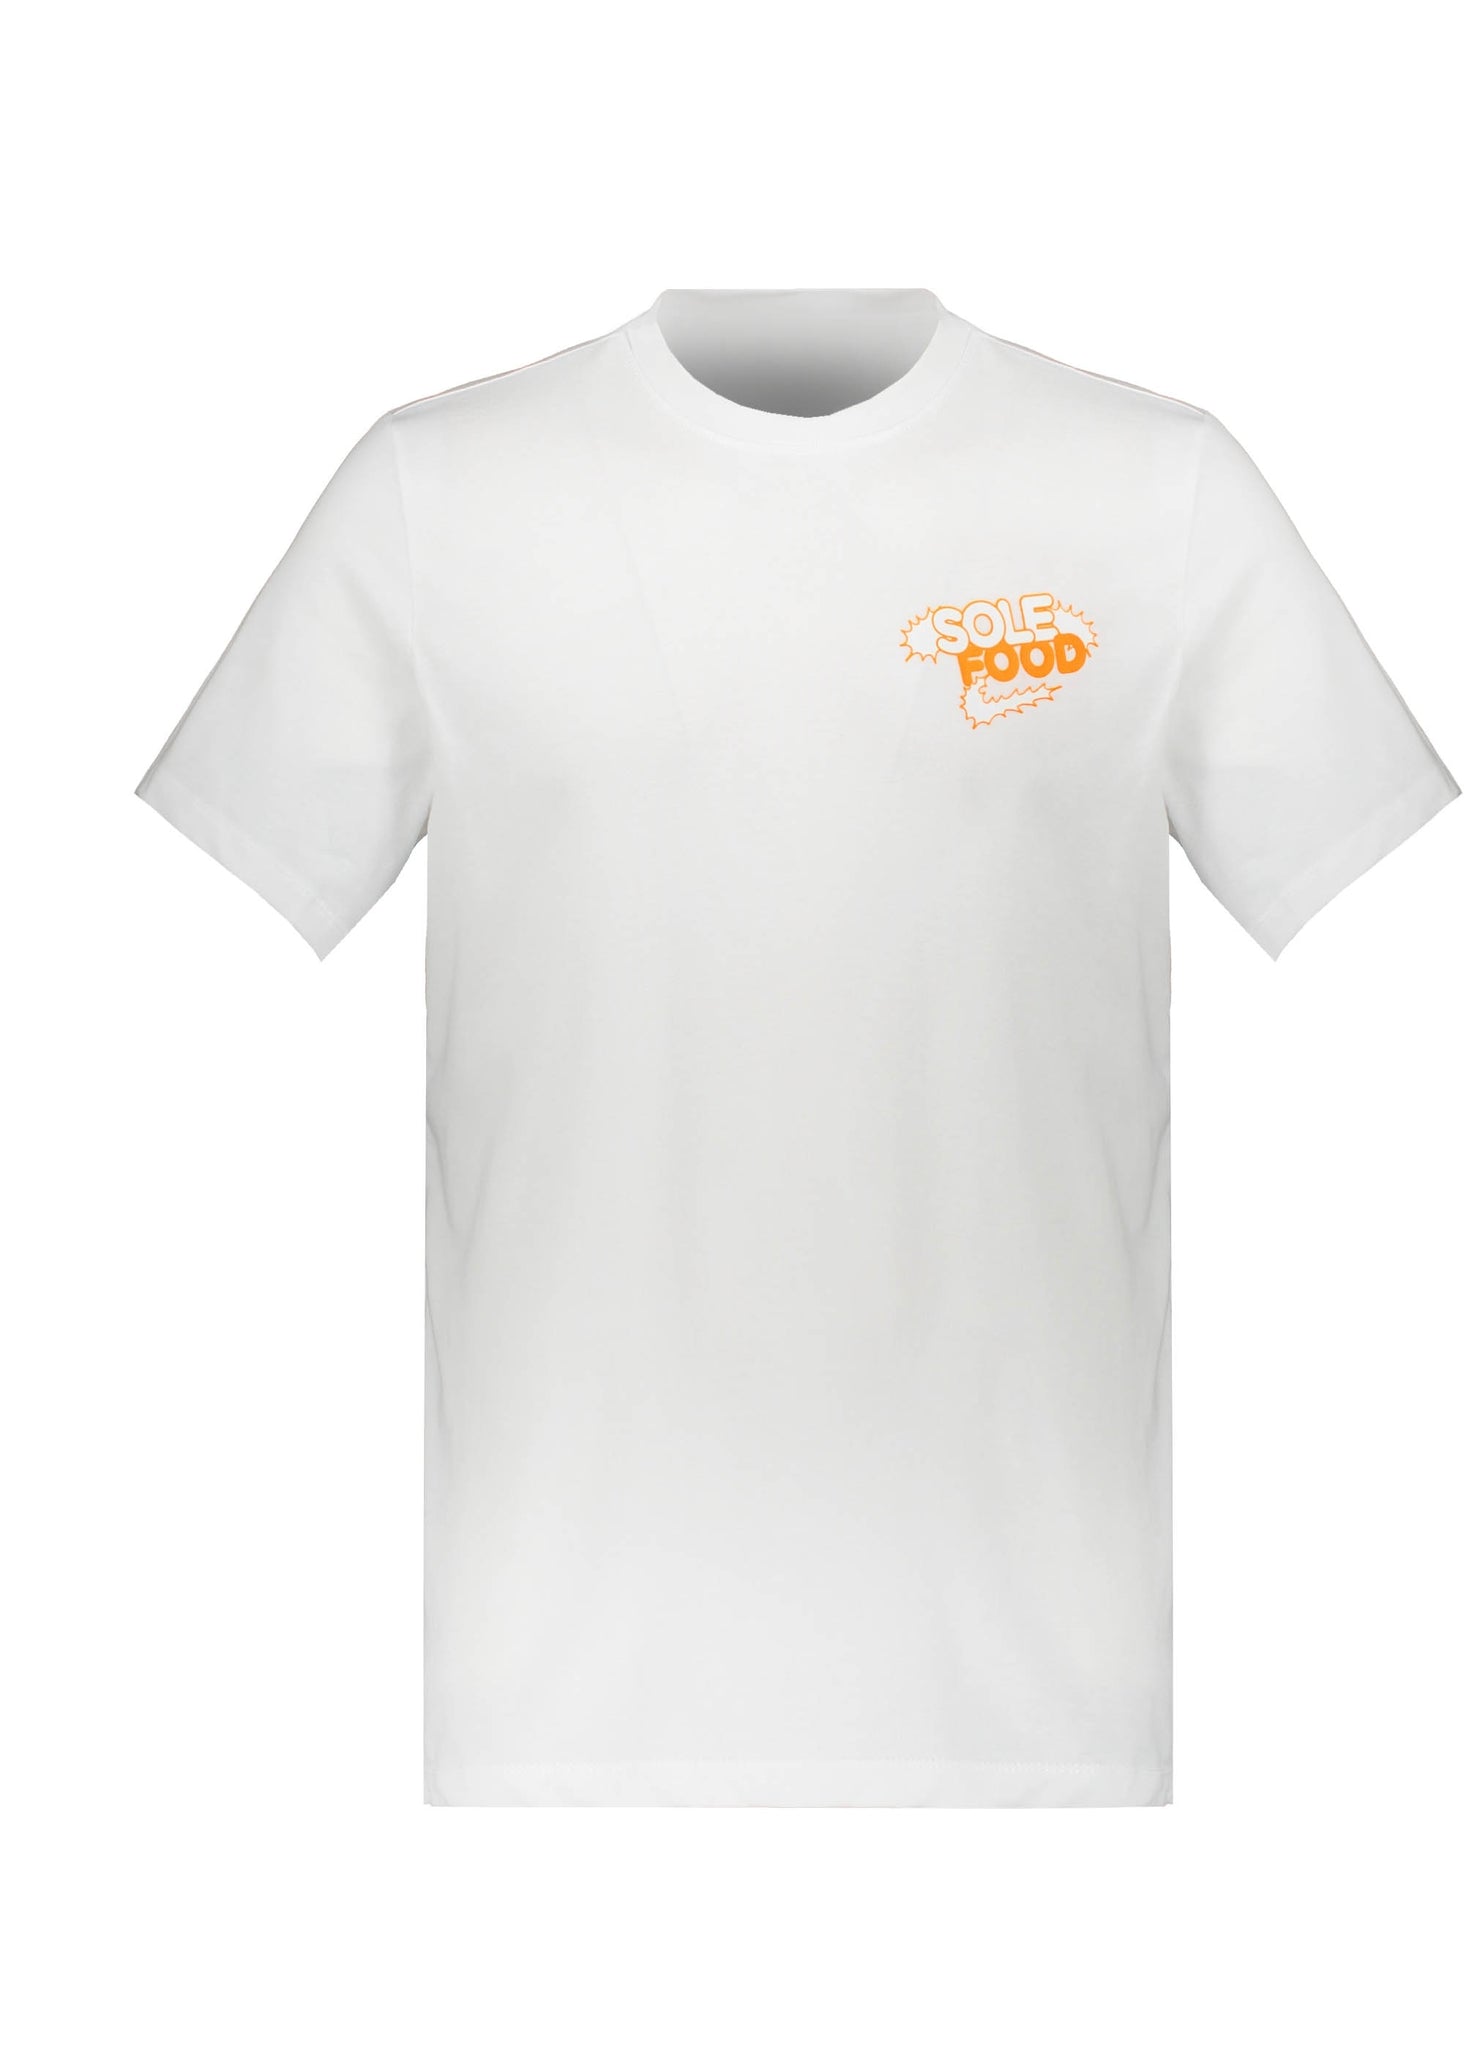 Nike Food Shoe T-Shirt - White